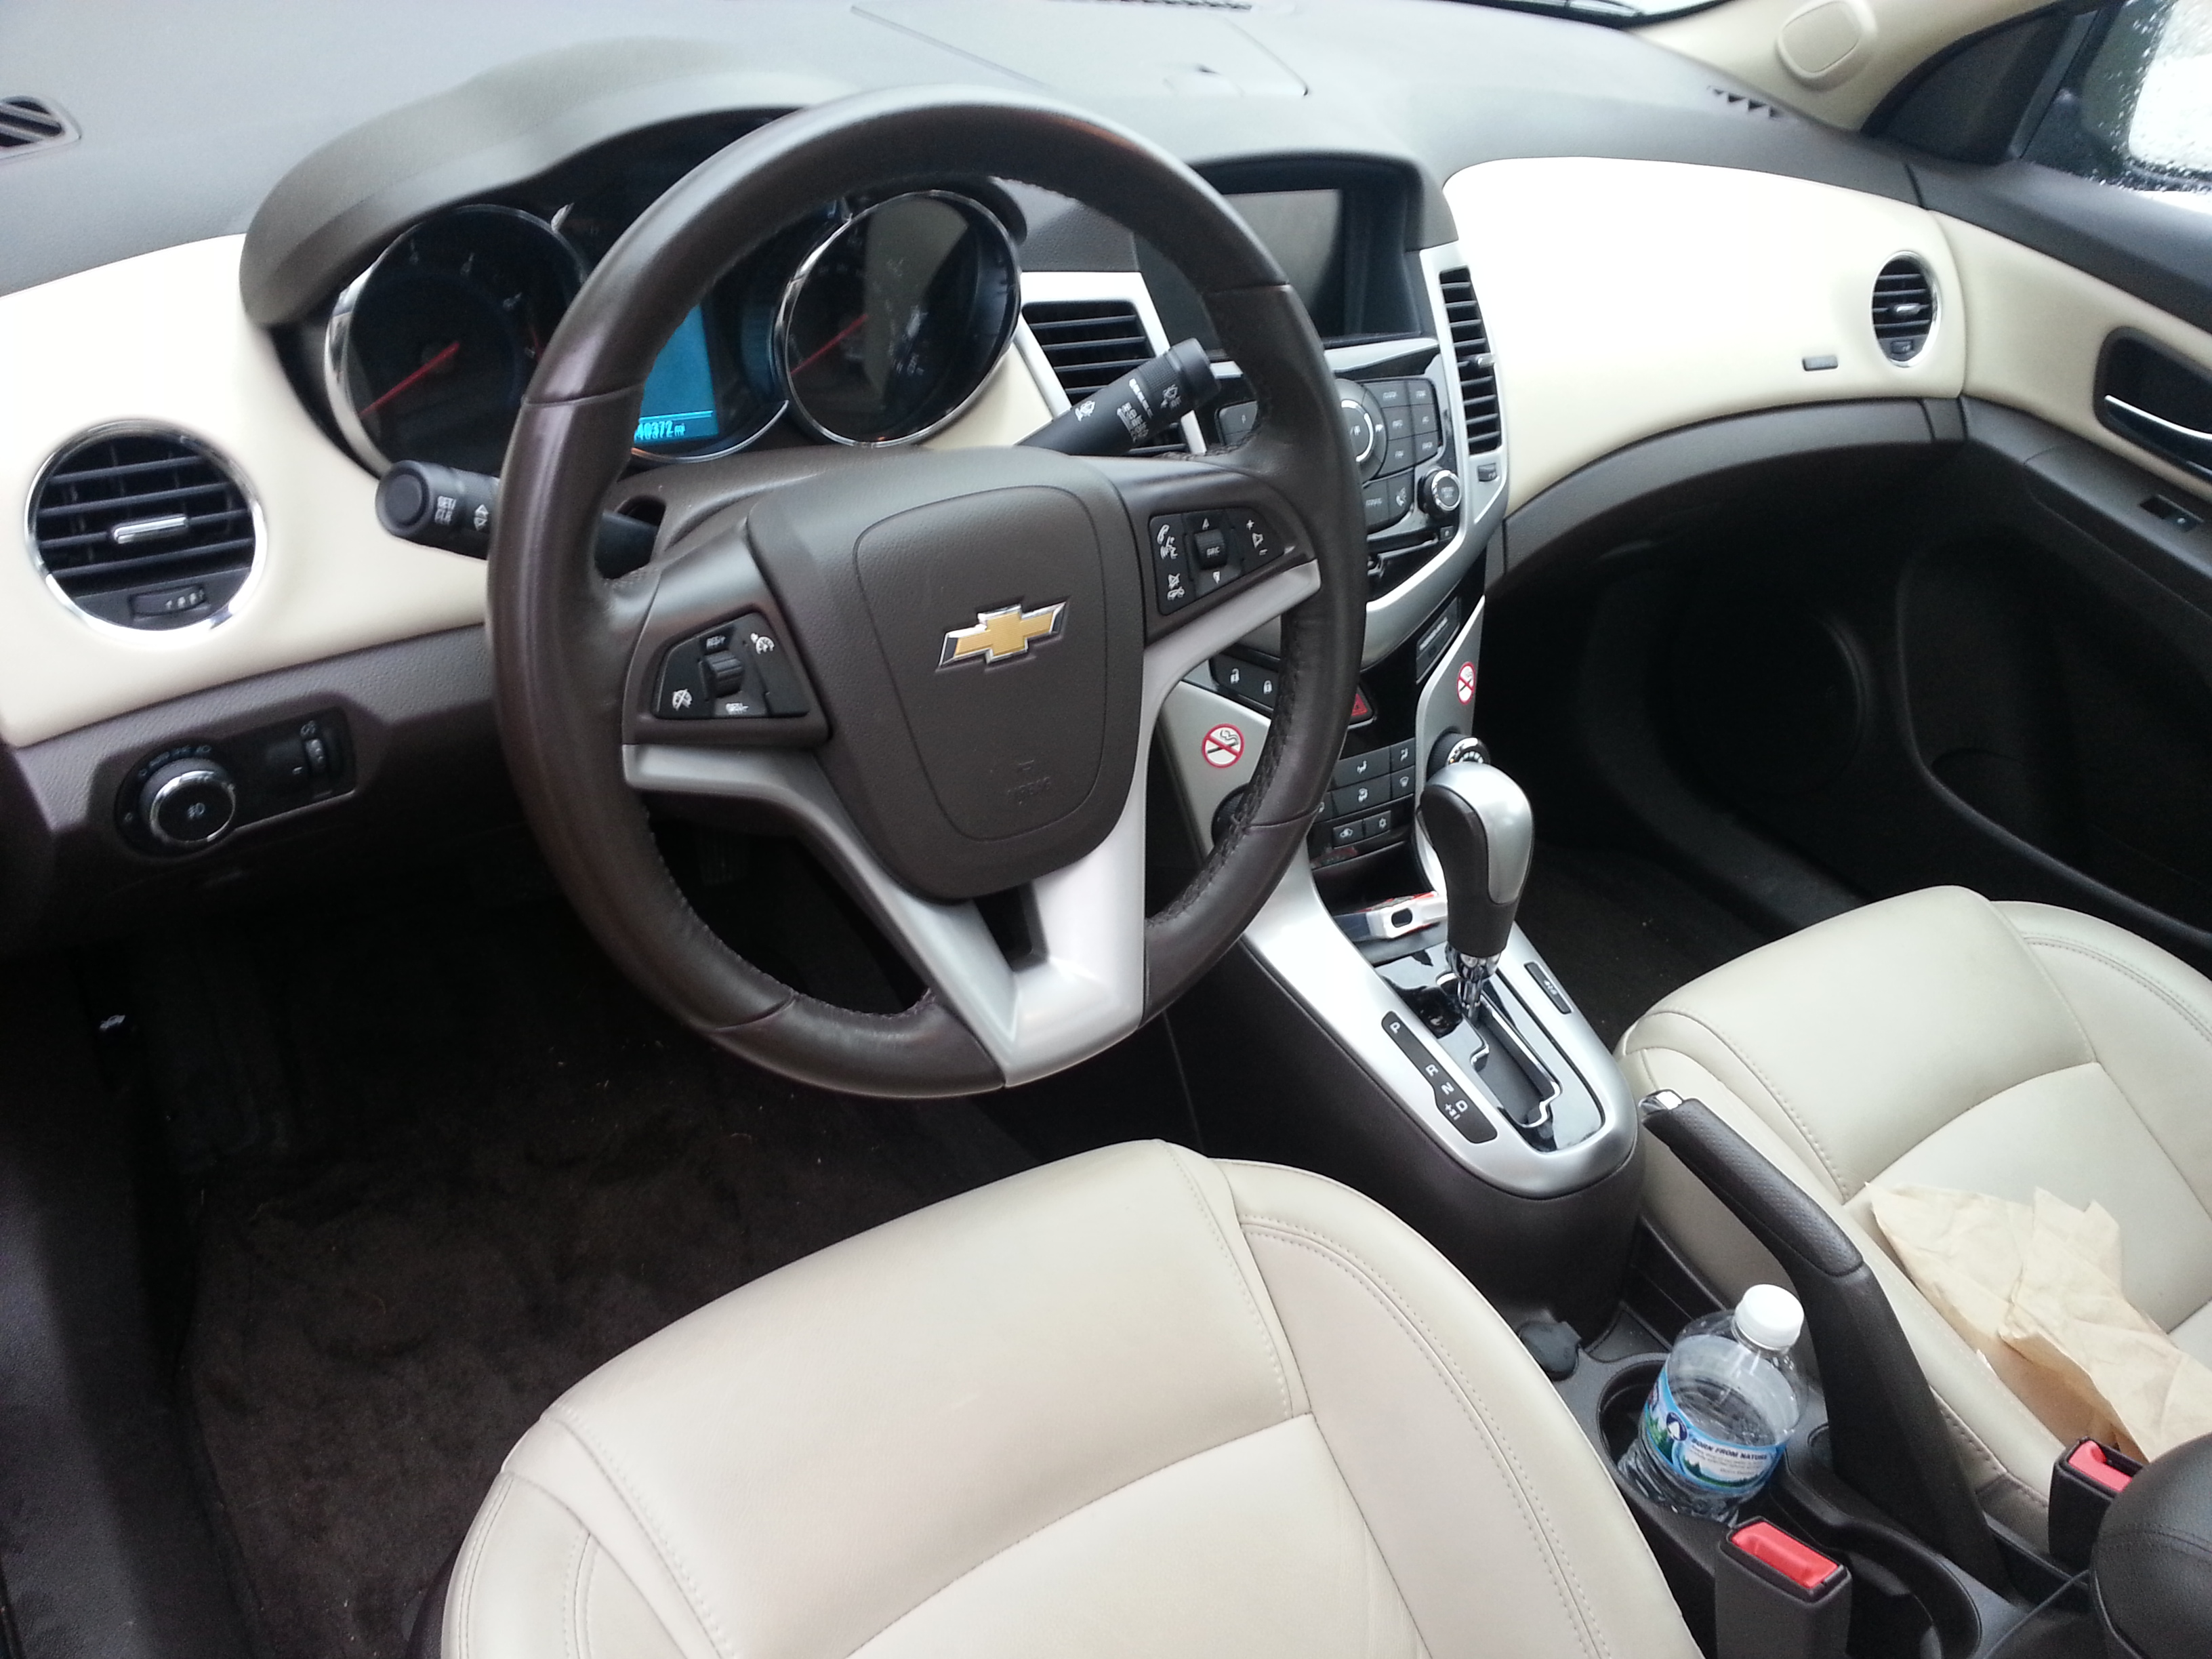 Chevrolet Cruze Station Wagon interior restyling